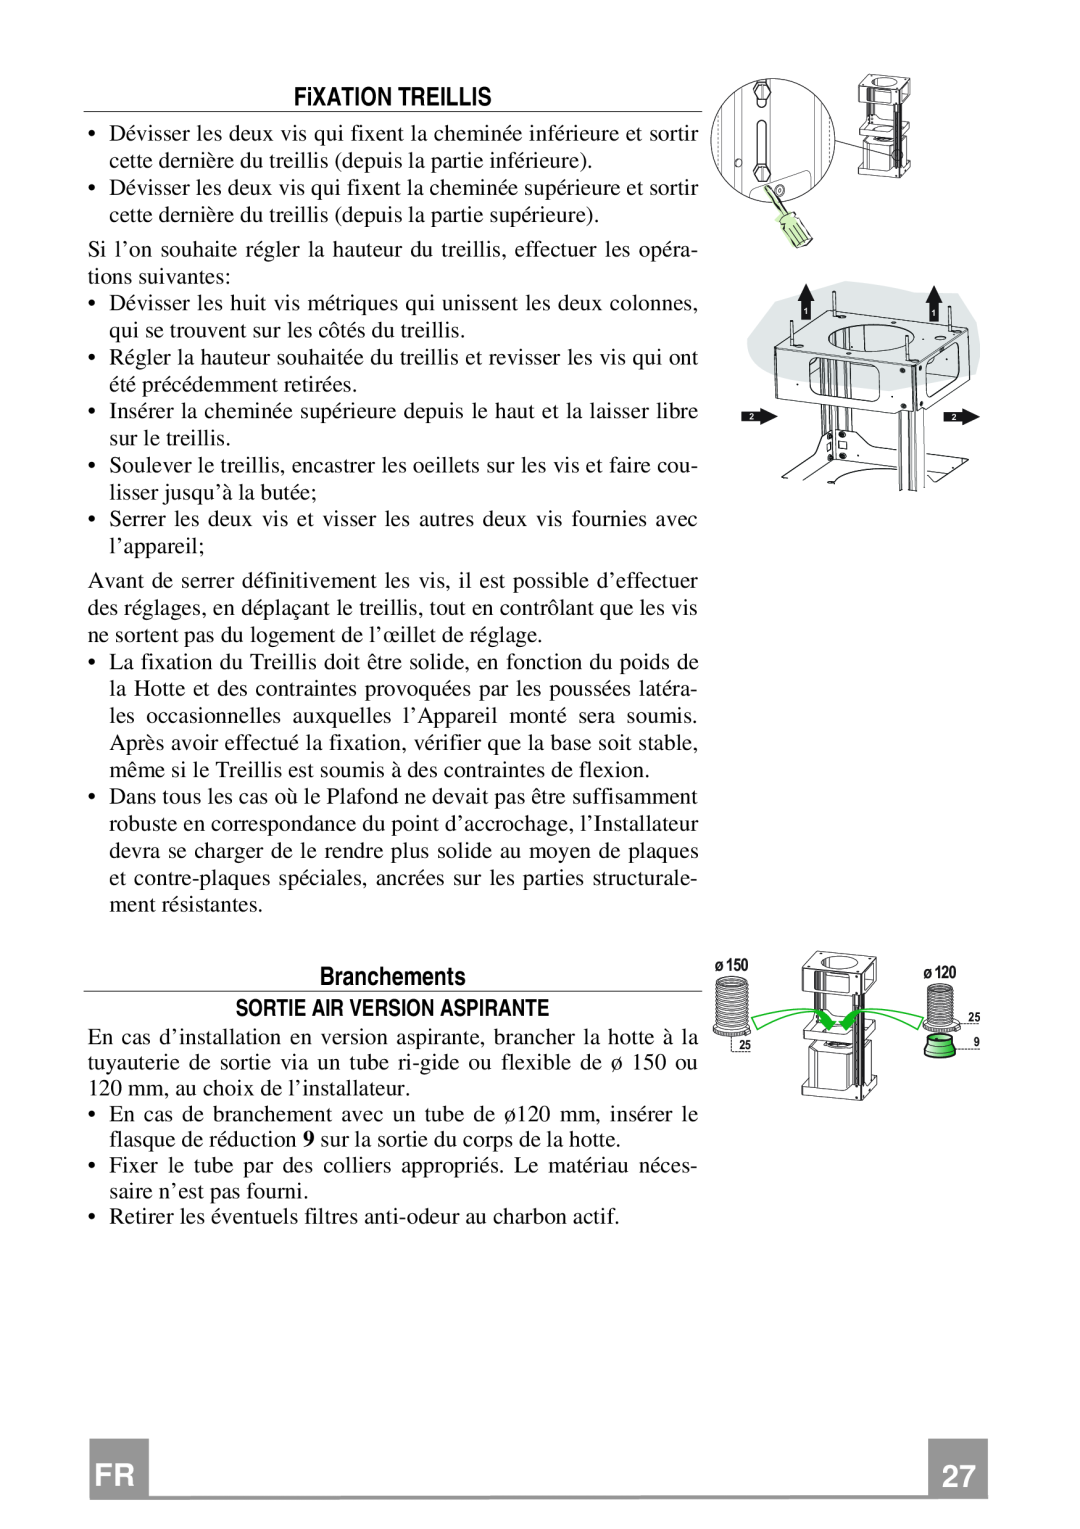 Franke Consumer Products FGC 906 I manual FiXATION TREILLIS, Branchements, Sortie Air Version Aspirante 